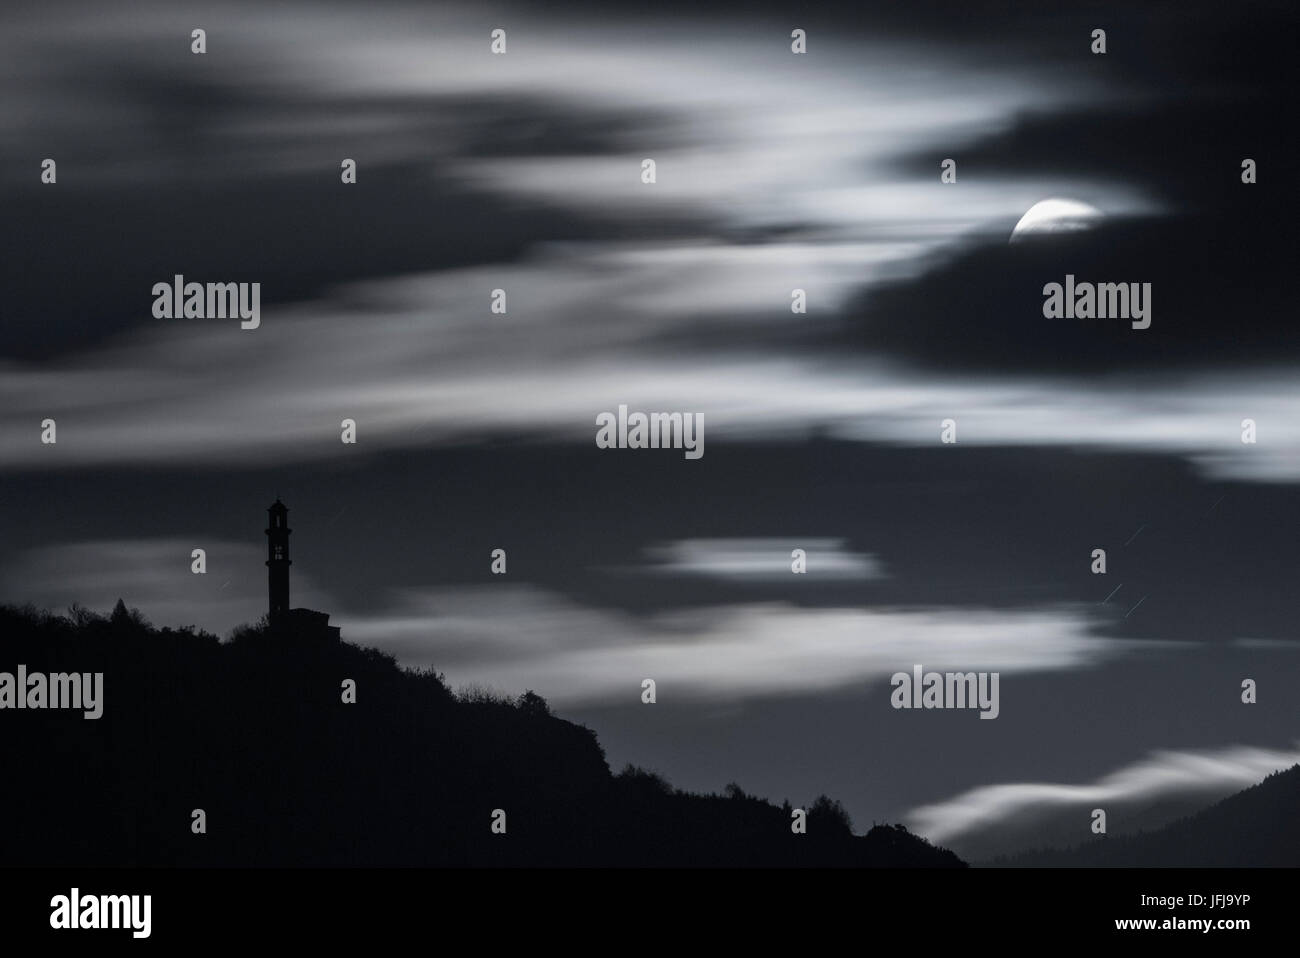 Europa, Italien, Lombardei, Valtellina, Vollmond-Nacht mit italienischen Berge Kirche des Somatassa in der silhouette Stockfoto